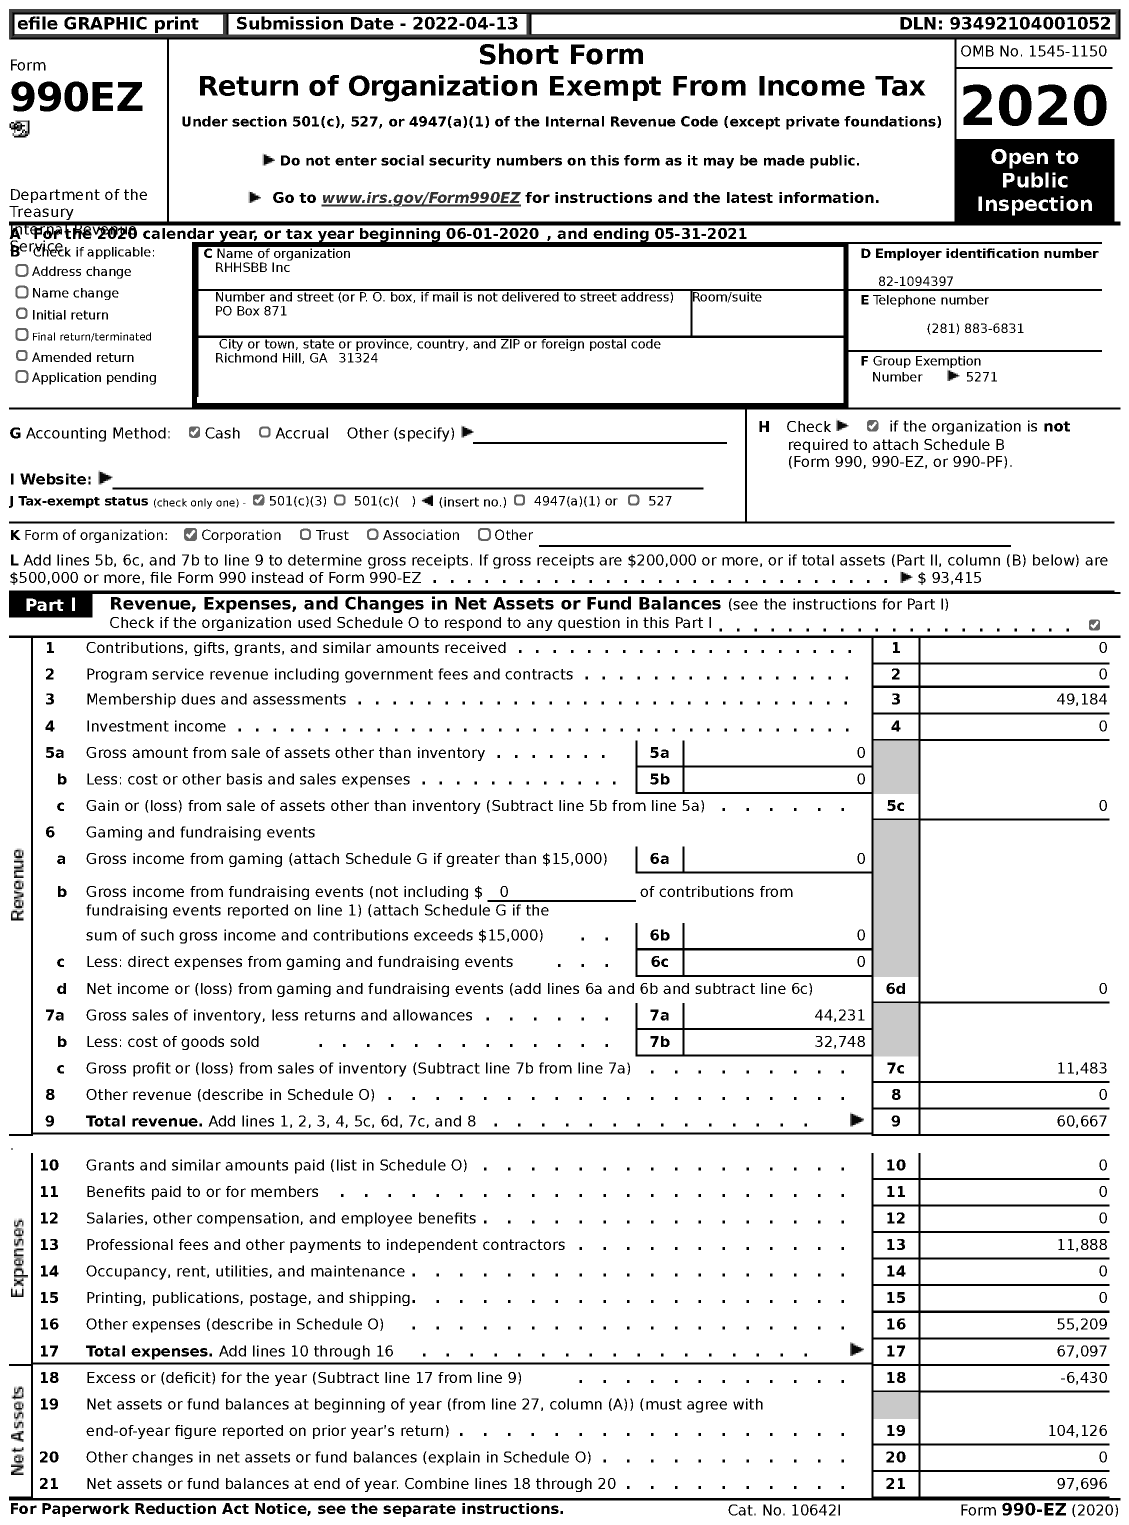 Image of first page of 2020 Form 990EZ for RHHSBB (RHHSBB Inc)